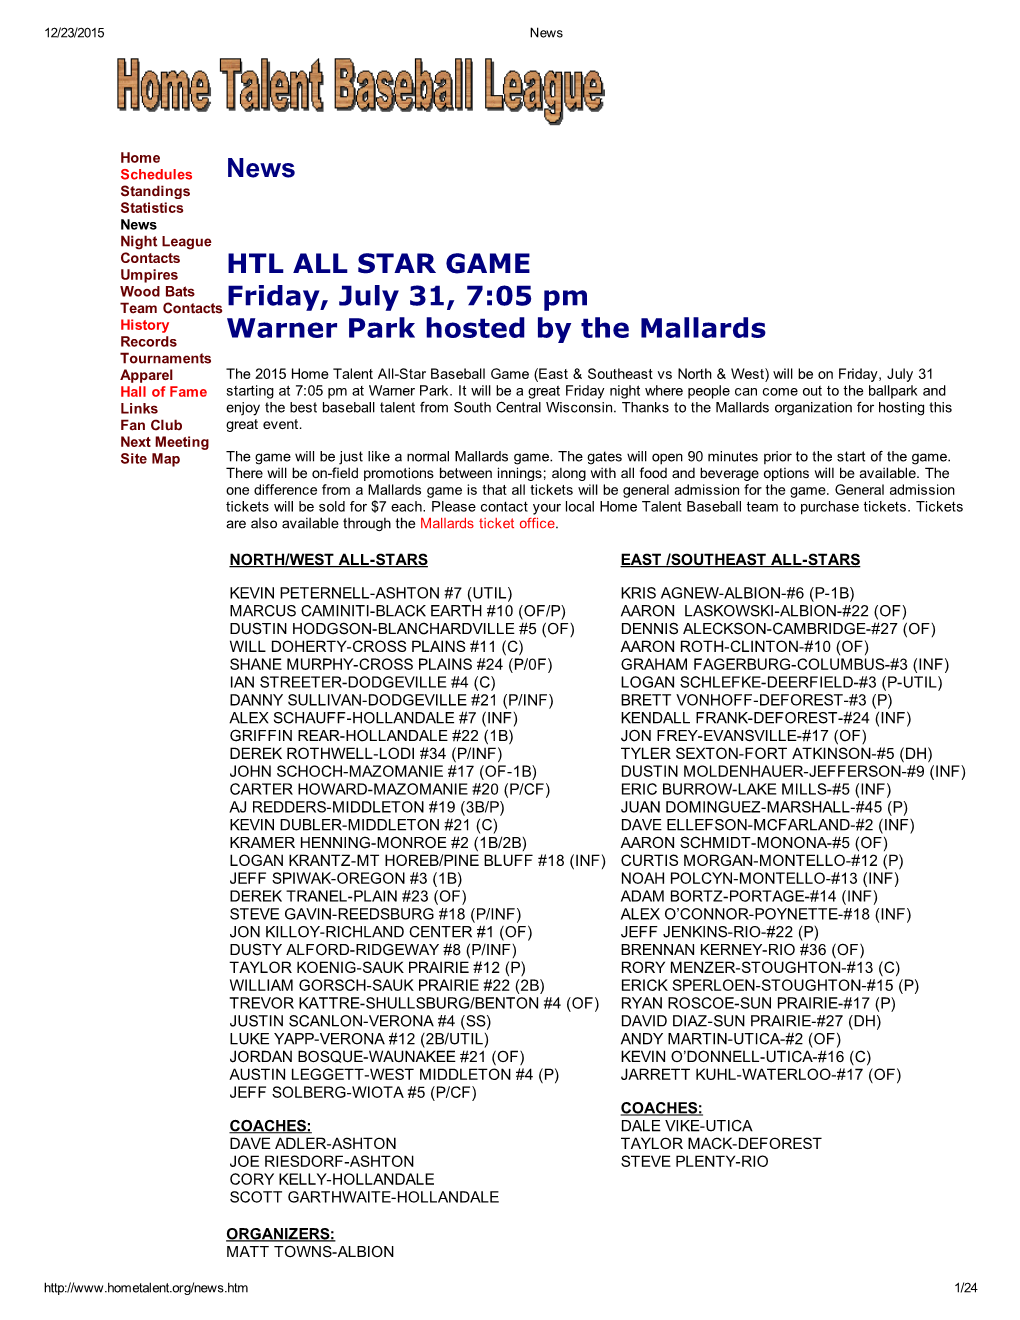 News HTL ALL STAR GAME Friday, July 31, 7:05 Pm Warner Park